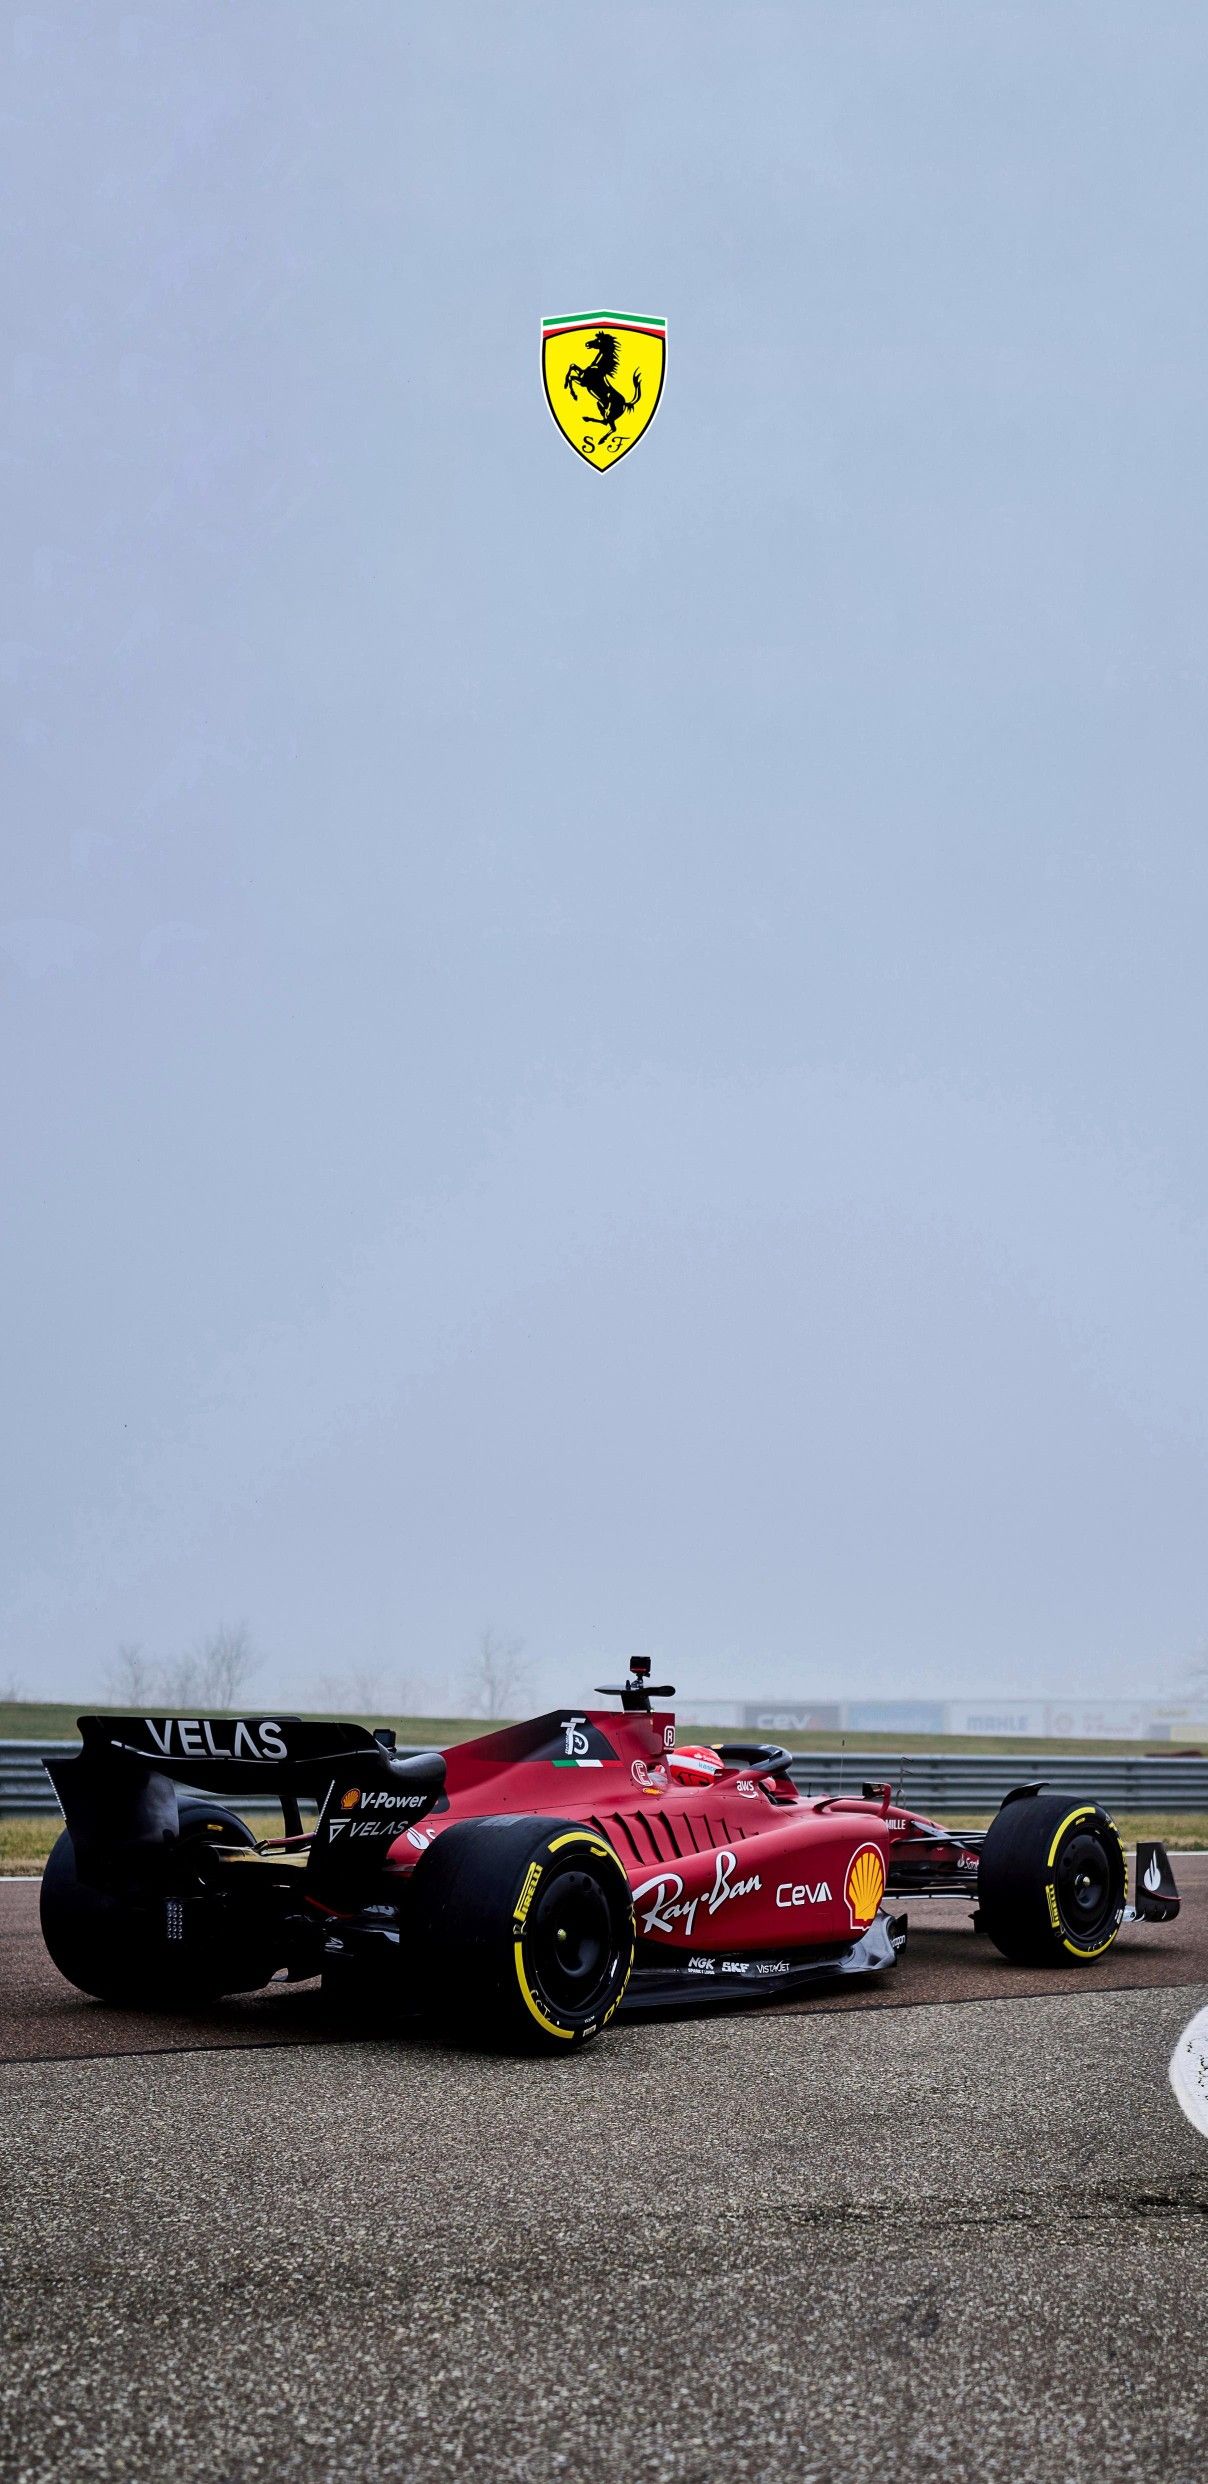 F1 Charles Leclerc 2022 Ferrari Phone Background. Formula 1 car racing, Formula 1 car, Formula 1